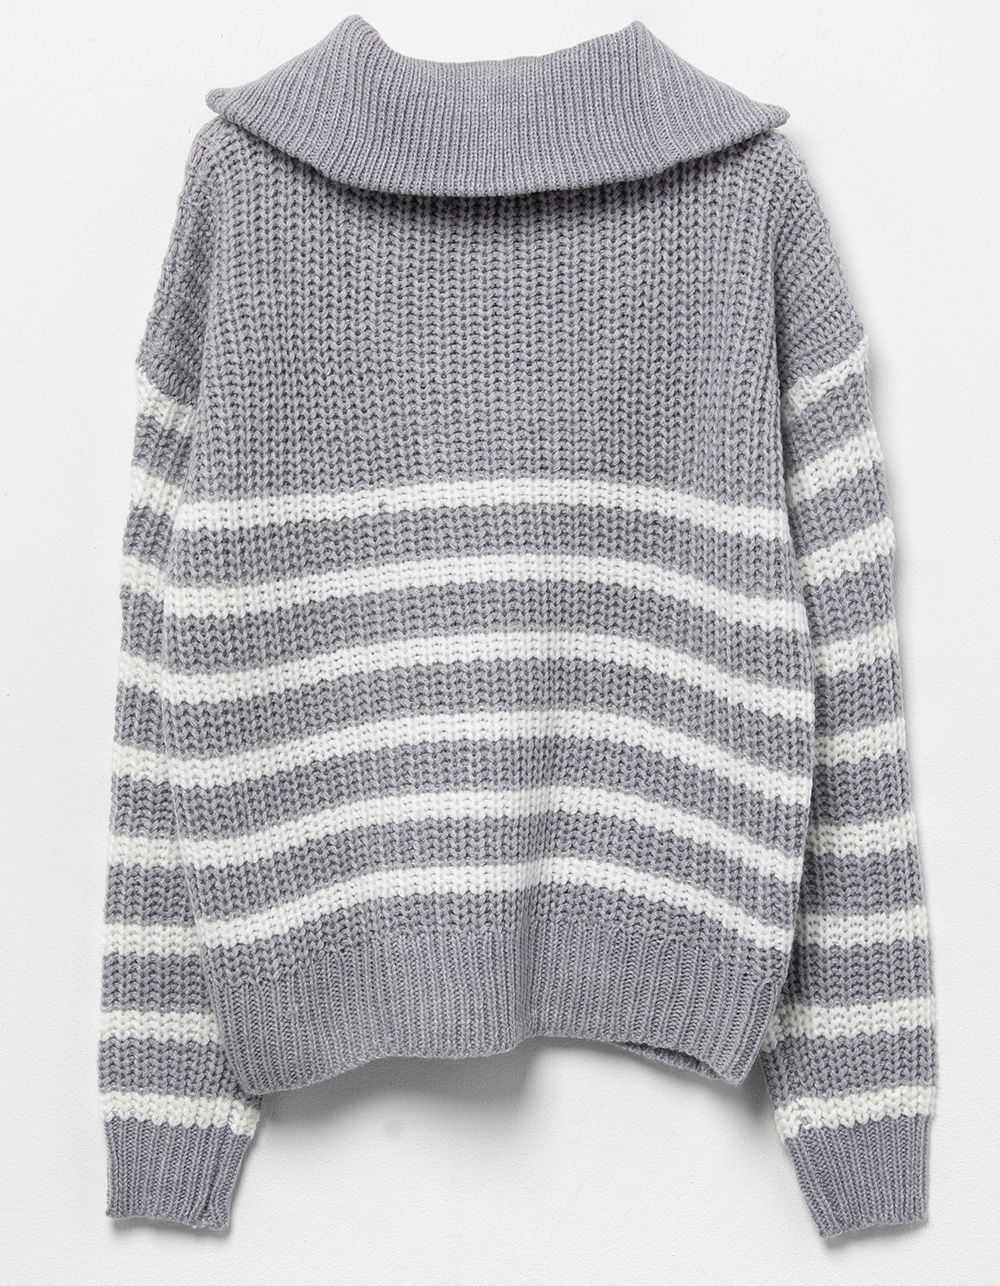 FULL CIRCLE TRENDS Stripe Half Zip Girls Sweater - GRAY/WHITE | Tillys